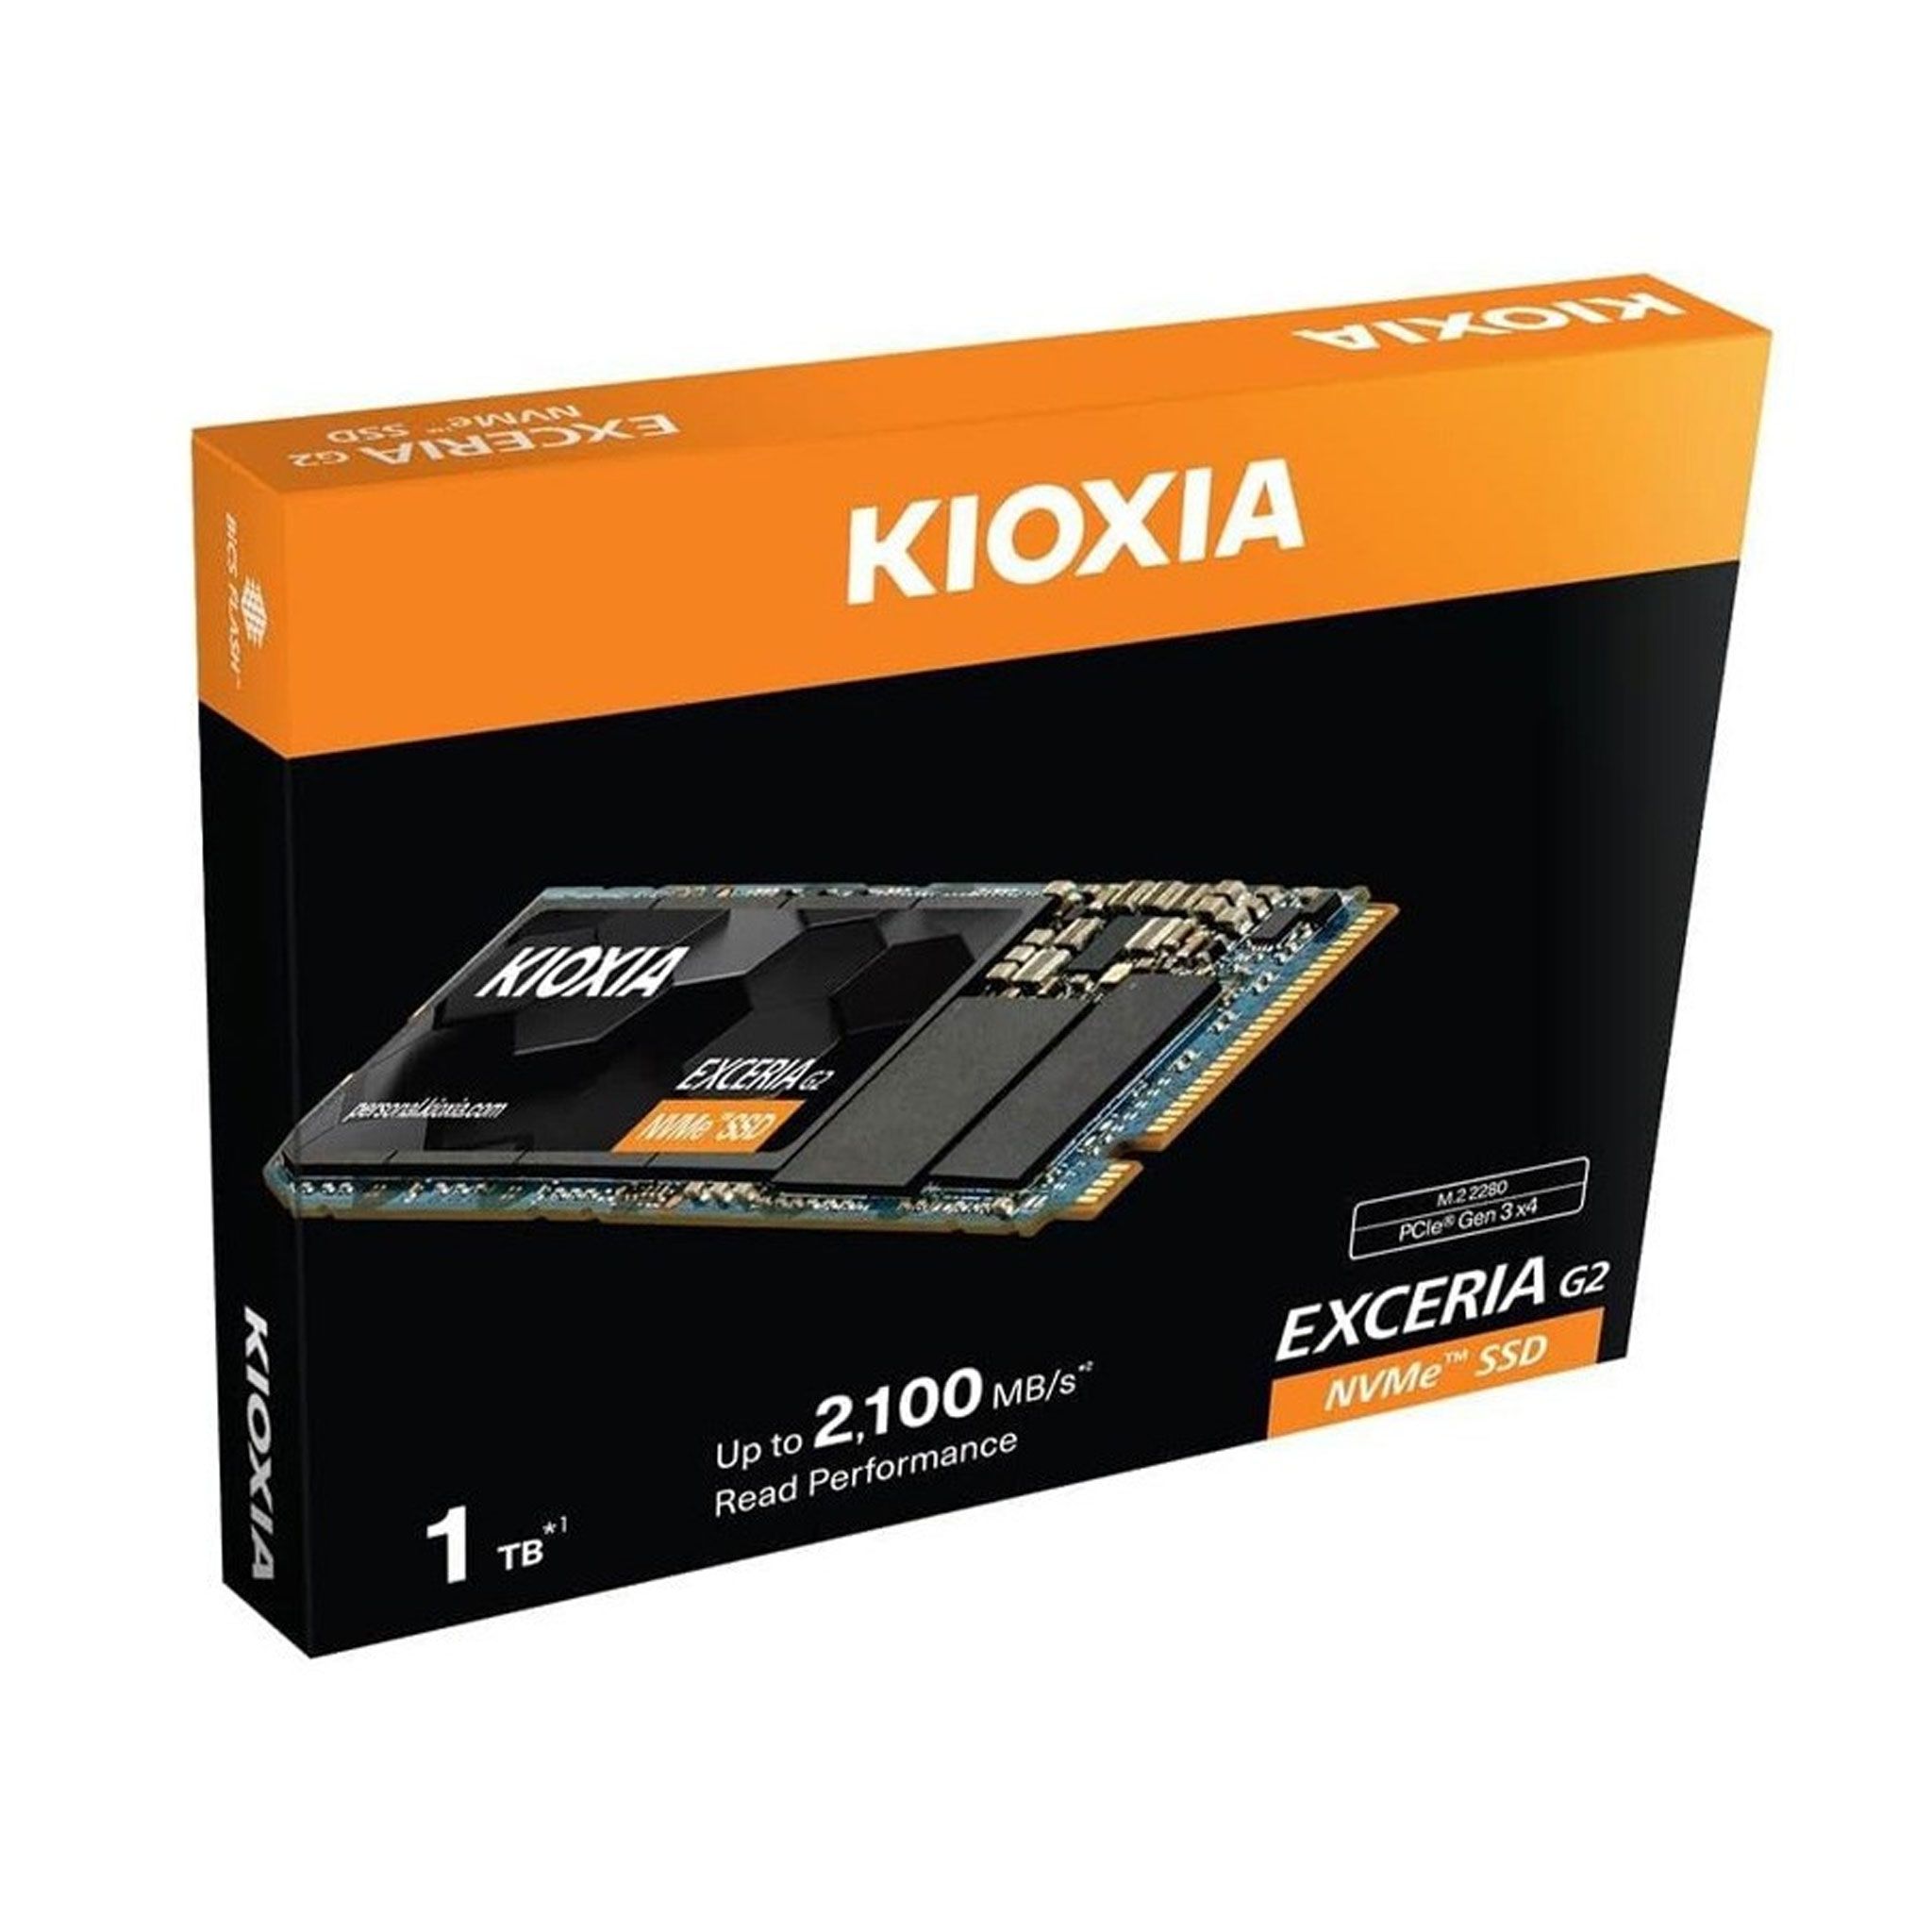 Ổ cứng SSD Kioxia Exceria G2 NVMe 1TB